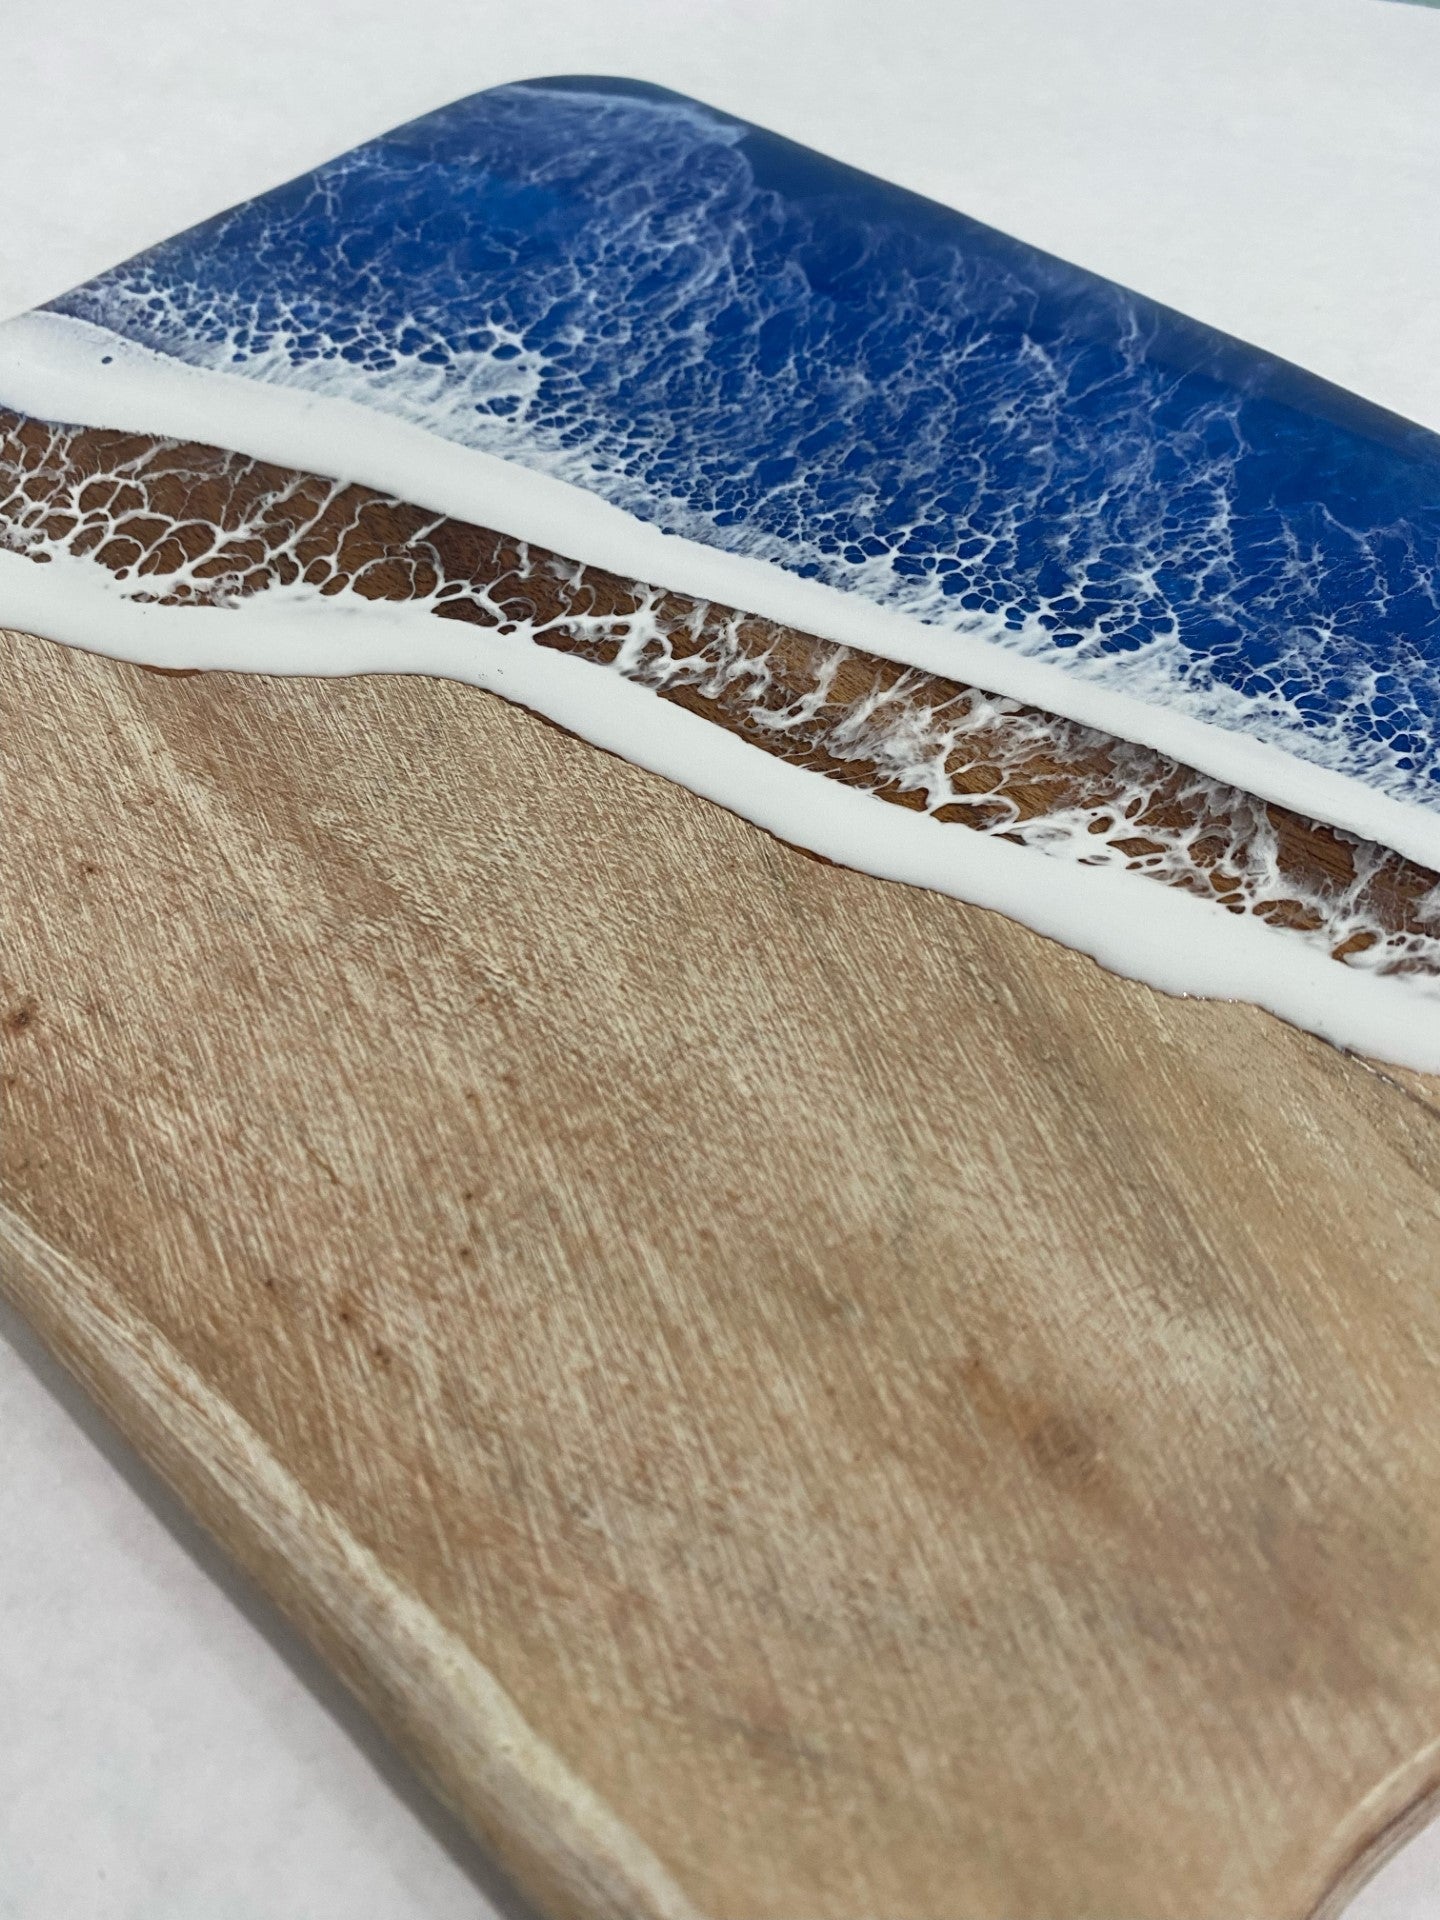 Wood Charcuterie Board - Ocean Waves